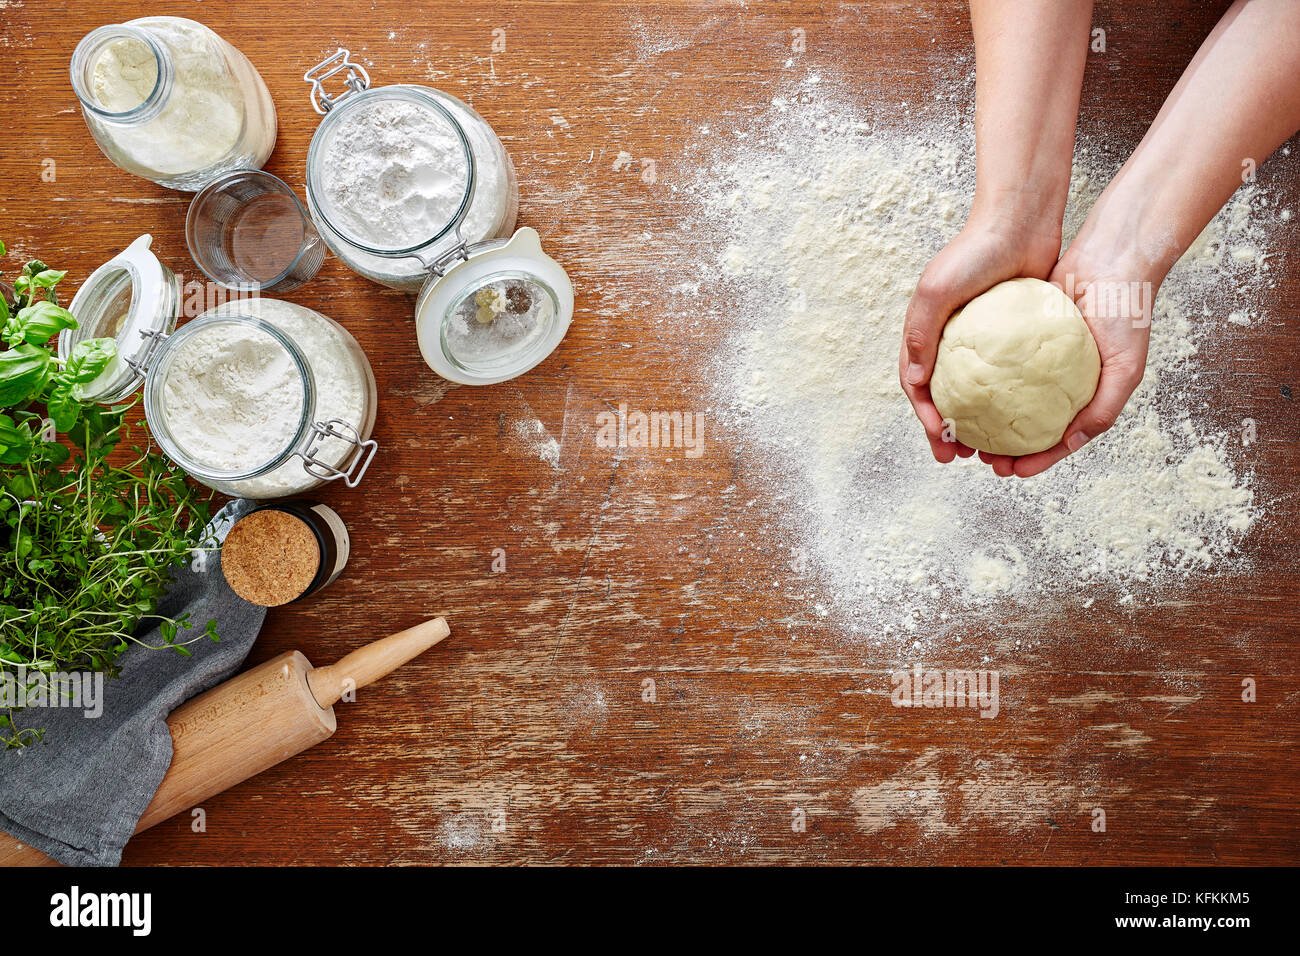 hands forming dough atmospheric kitchen scene Stock Photo